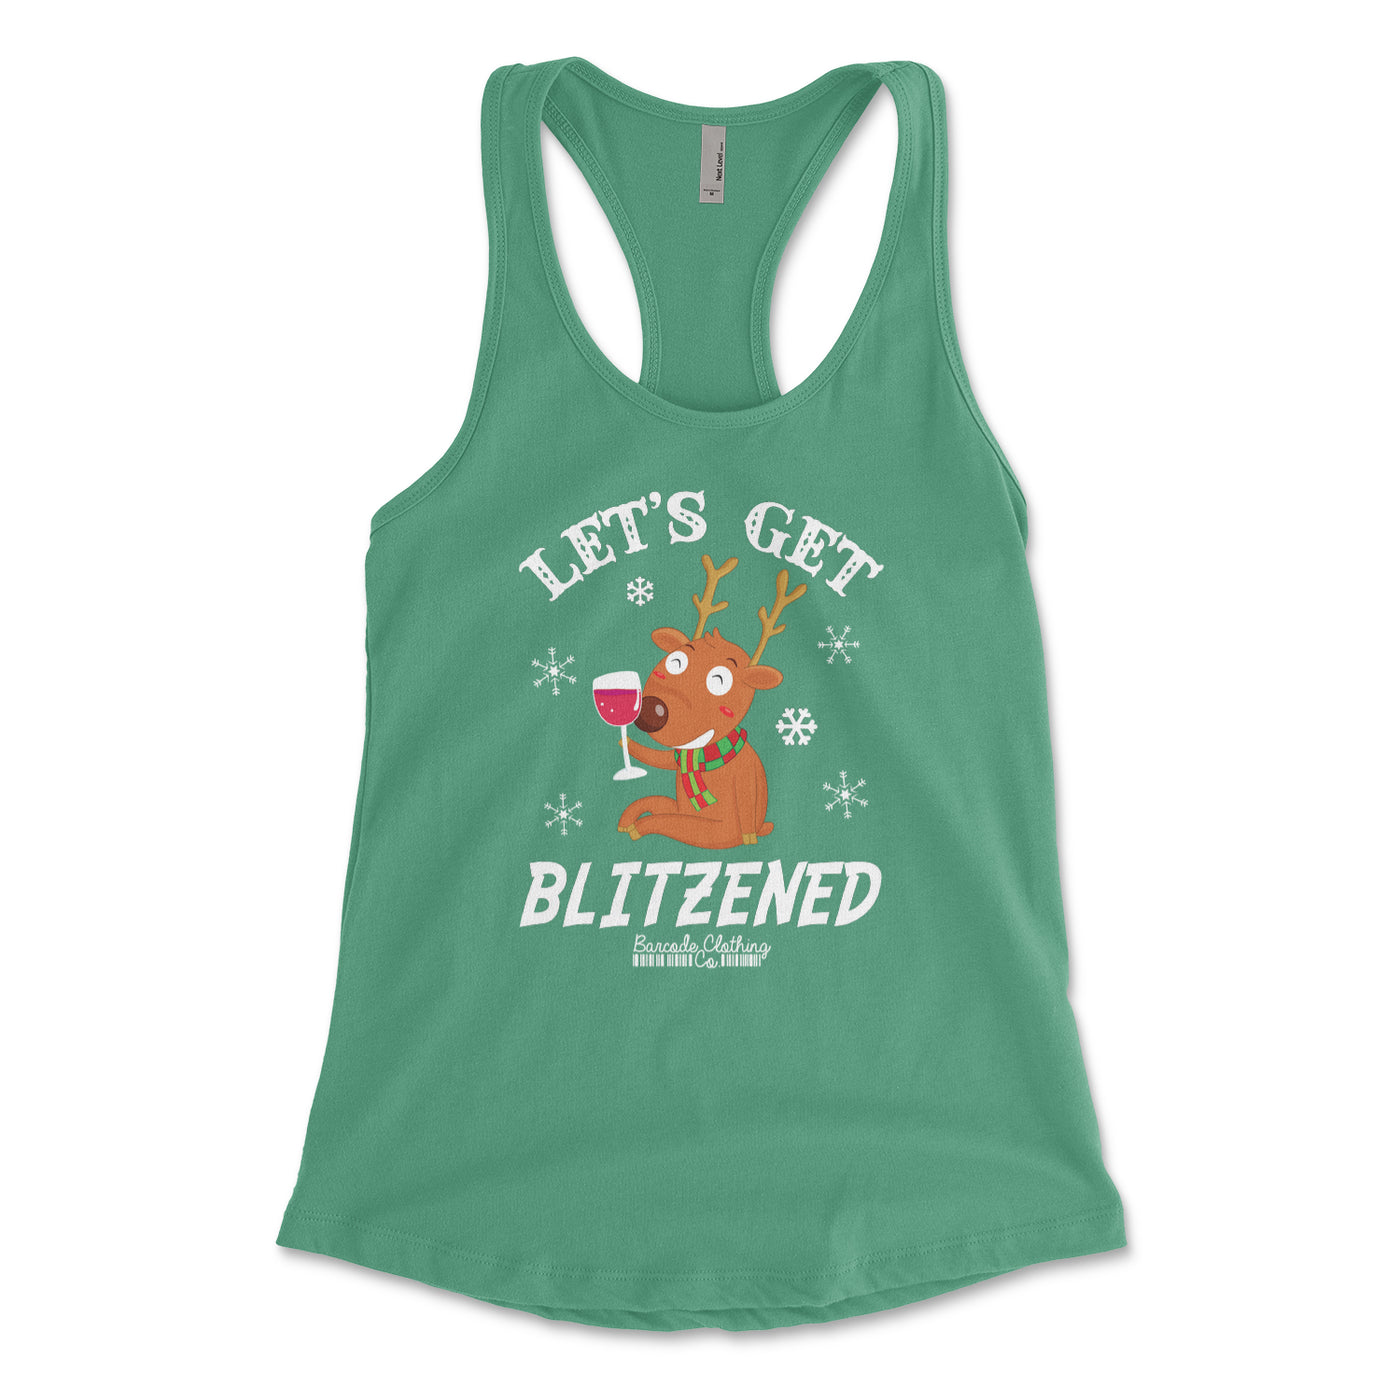 Let's Get Blitzened